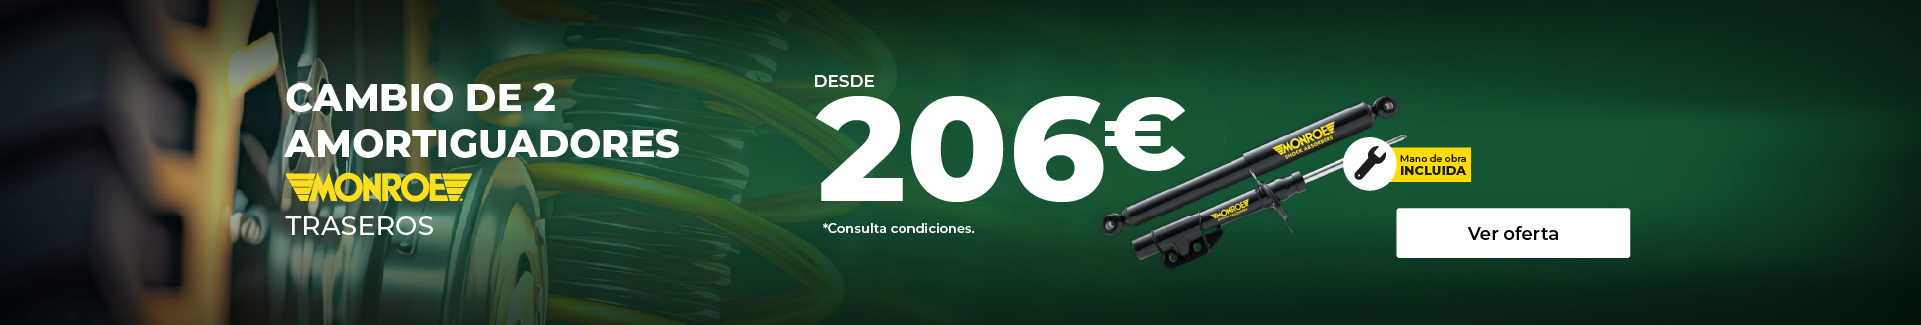 CAMBIO DE 2 AMORTIGUADORES DESDE  206€